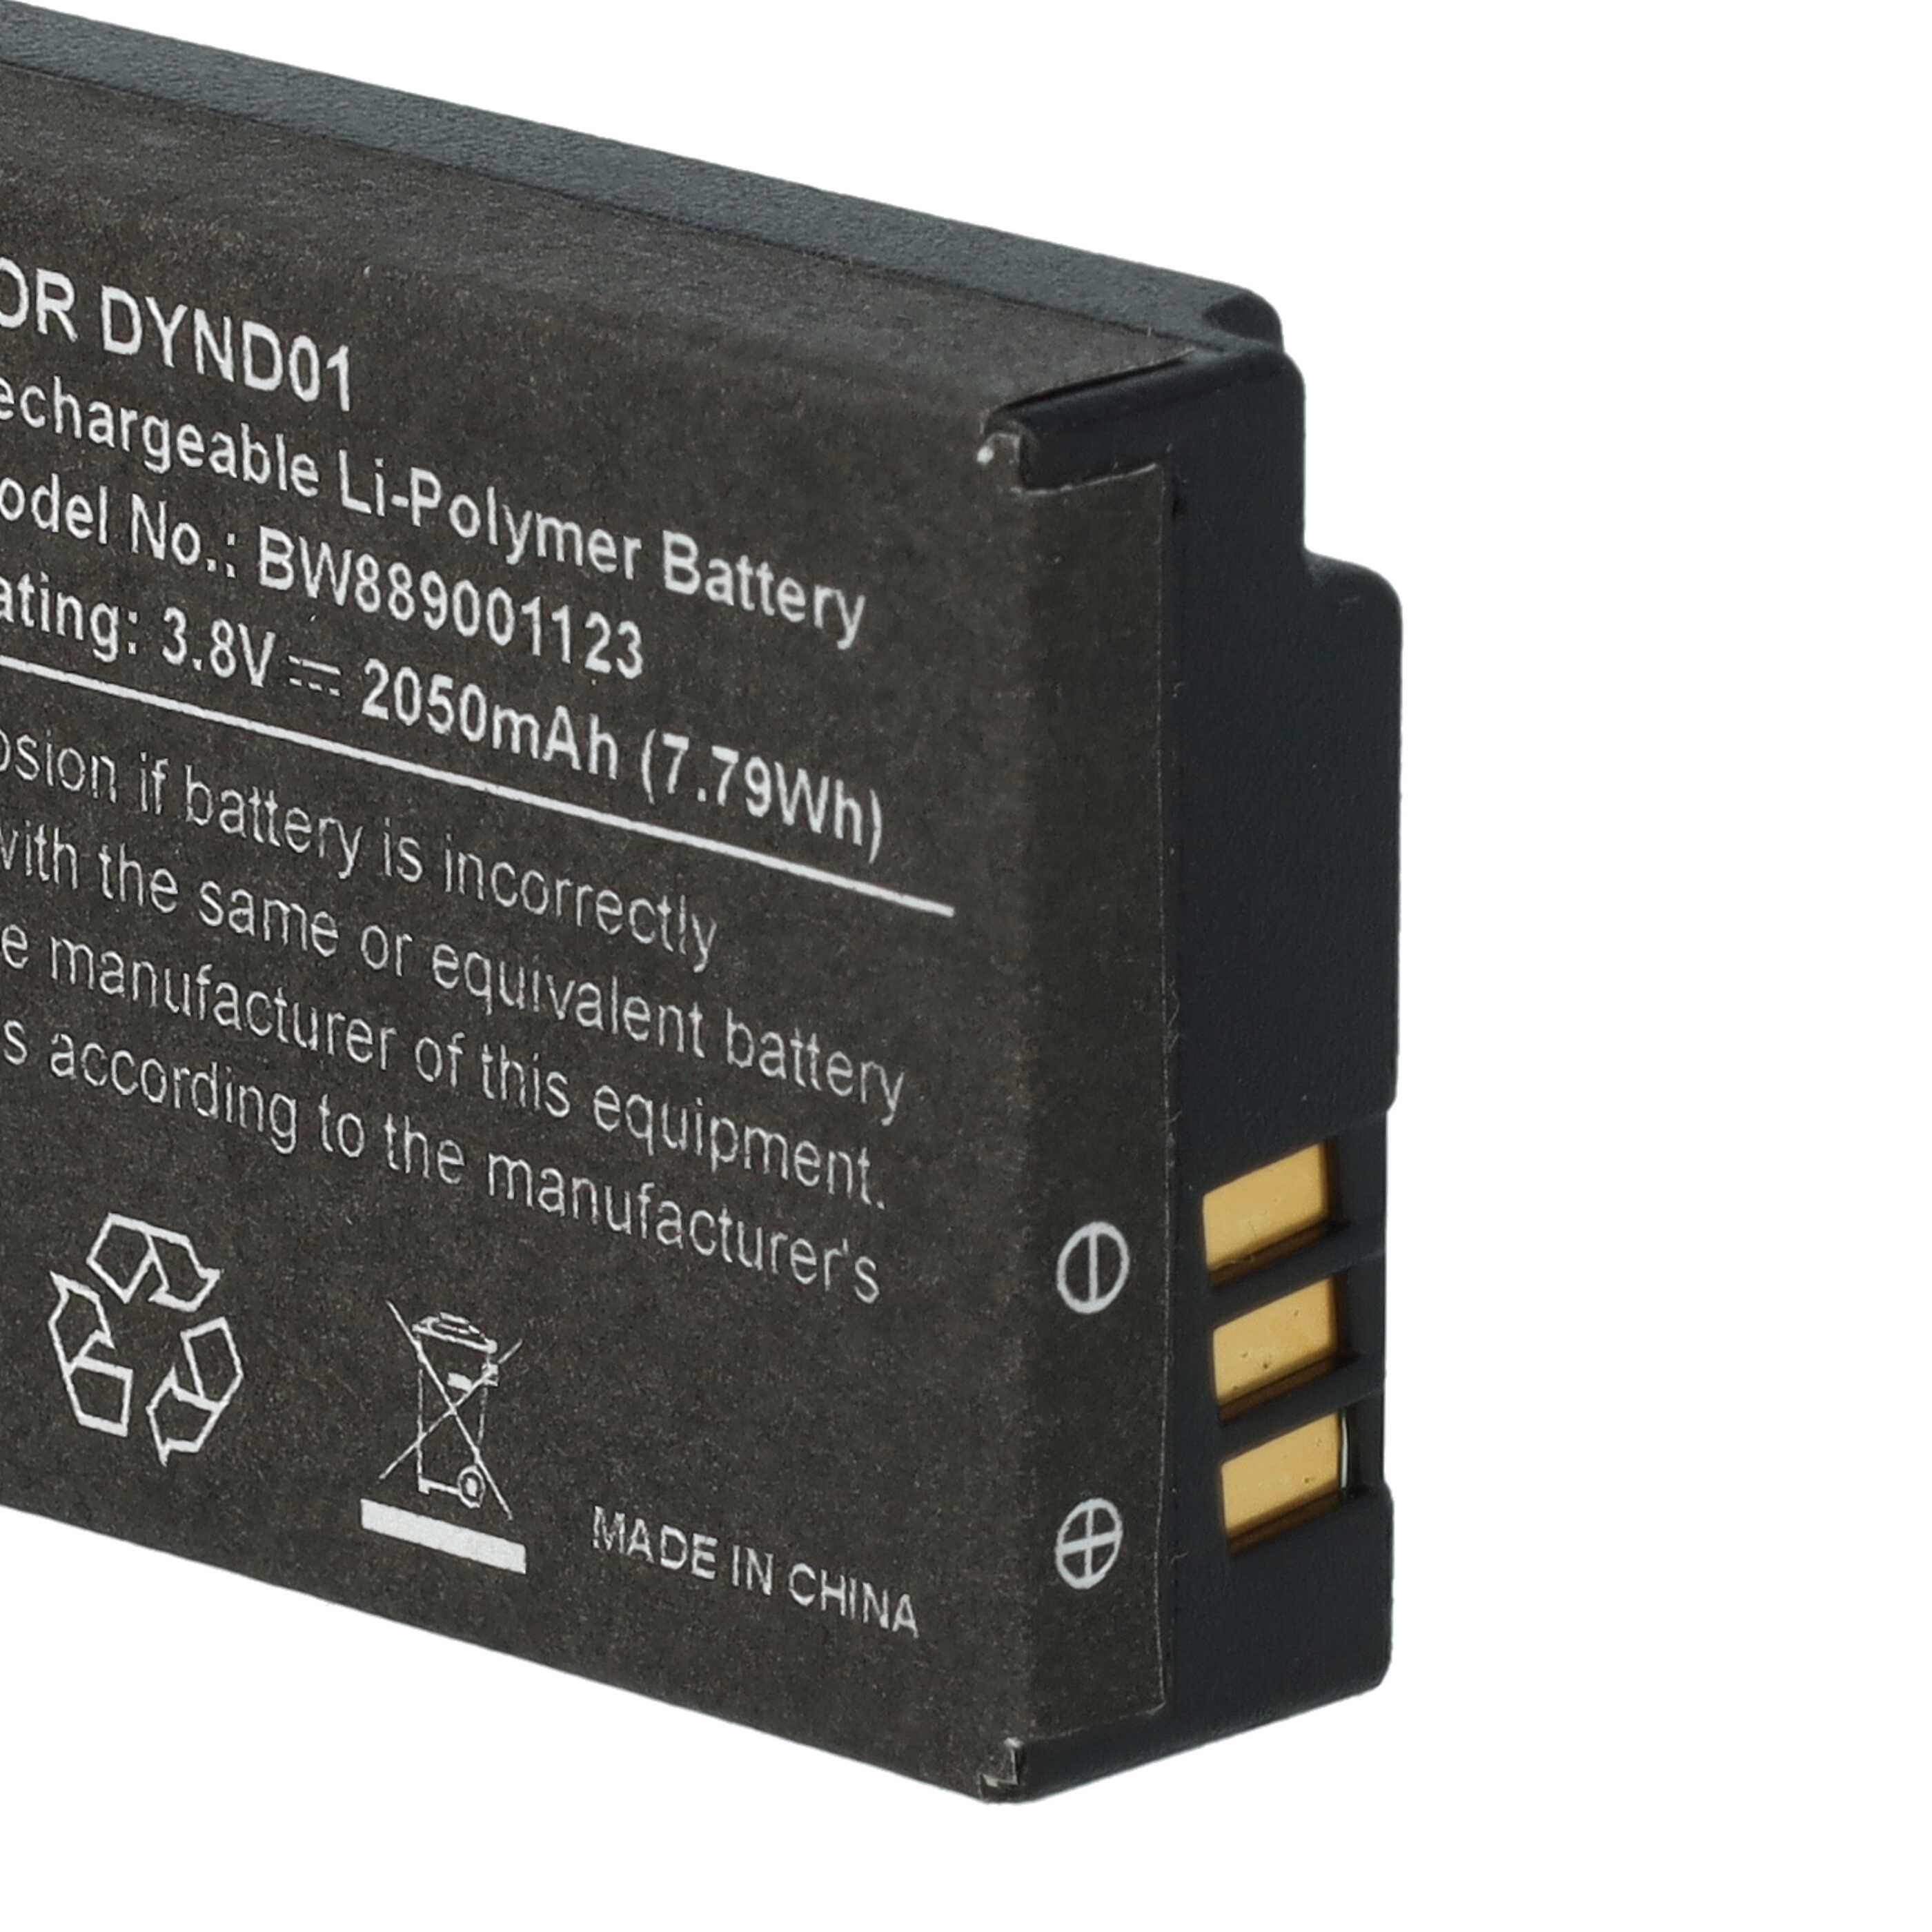 Akumulator do konsoli Microsoft zamiennik Microsoft DYND01 - 2050 mAh, 3,8 V